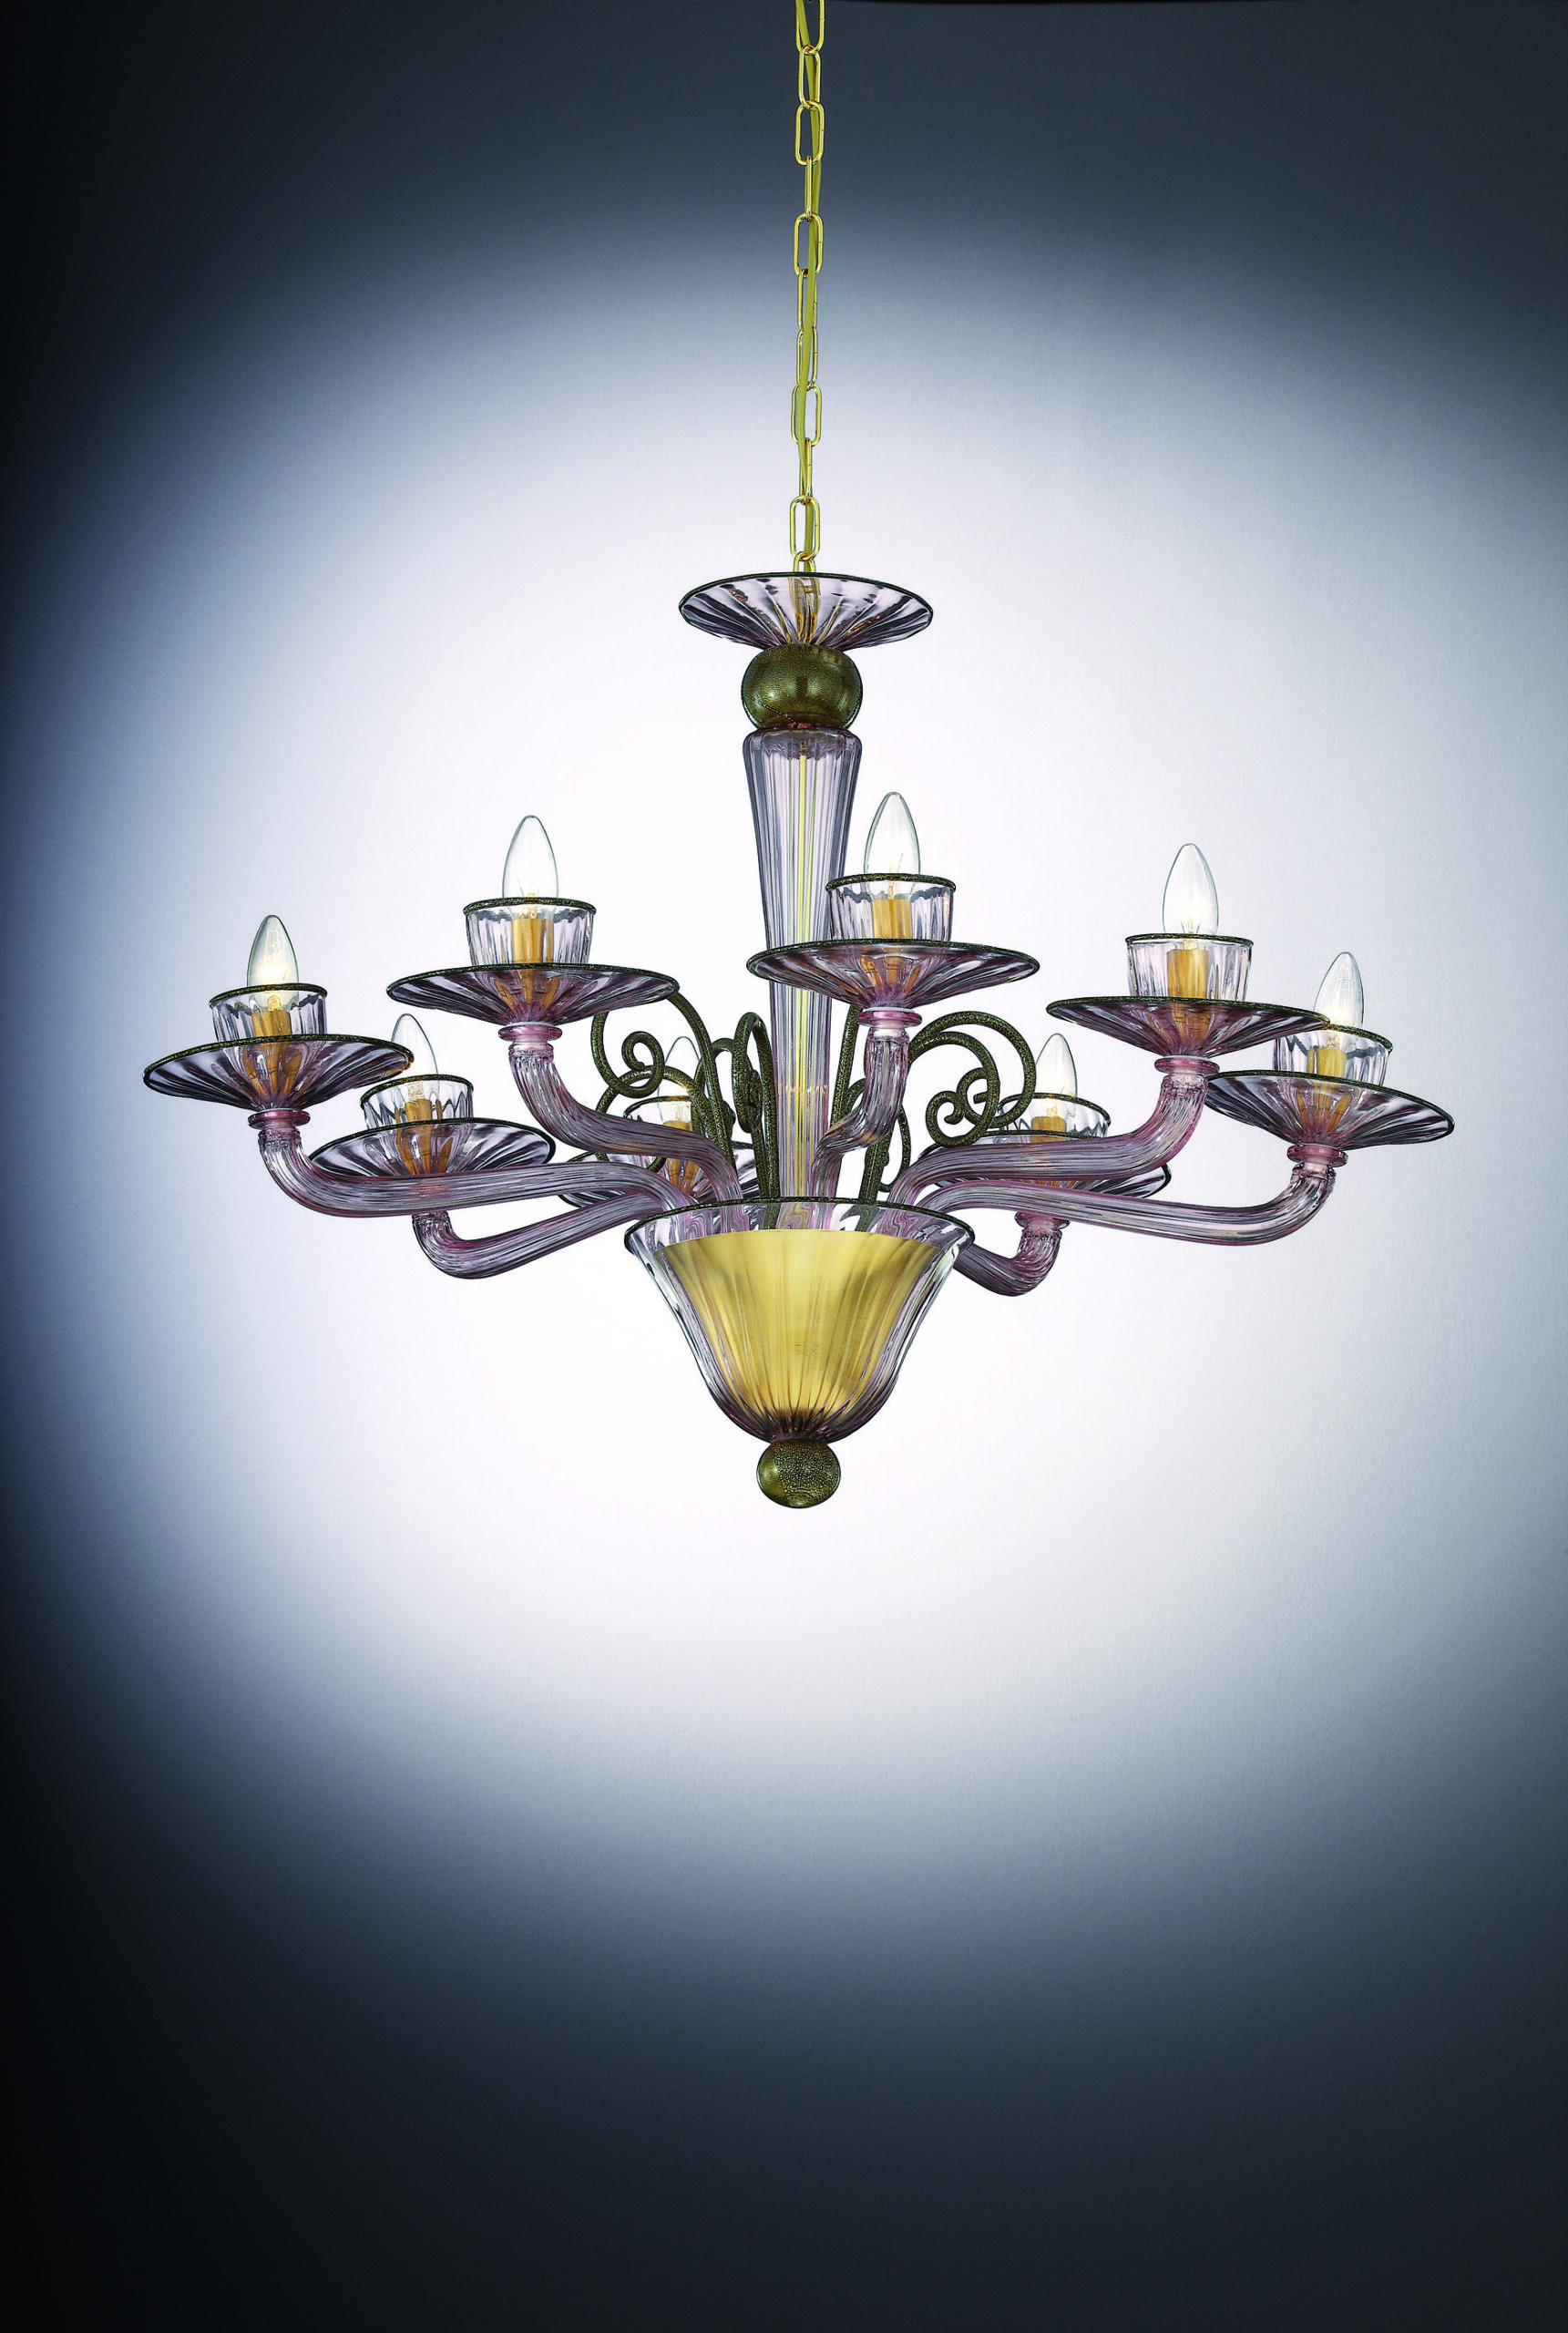 Classic MuranoChandelier "Bellini" With 8 Lights - Murano Glass